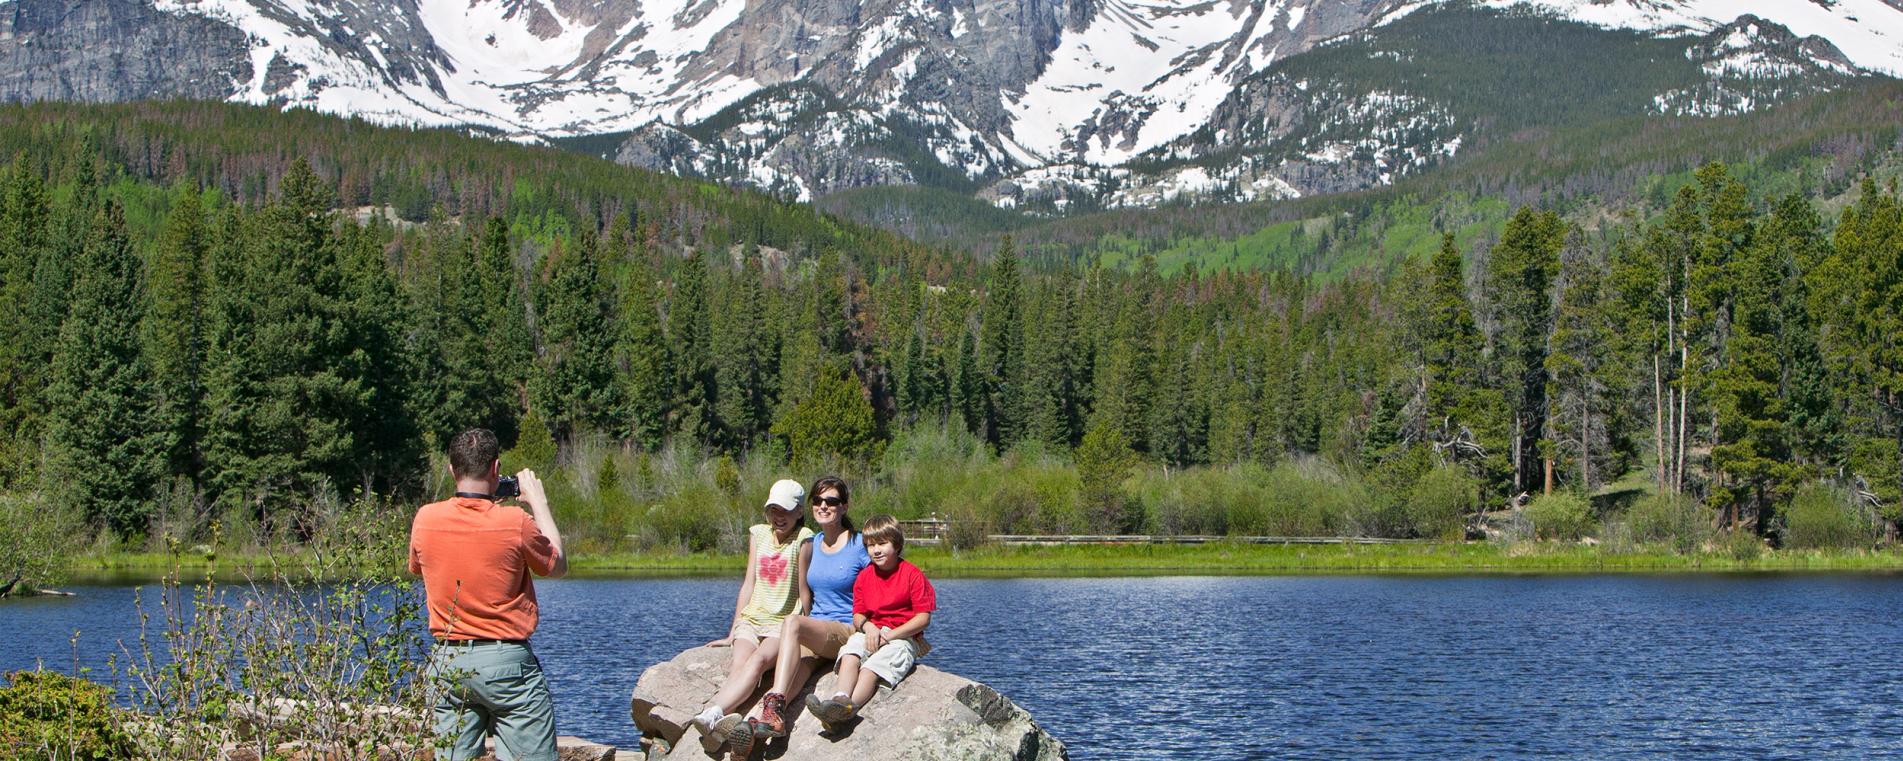 Family Photo At Sprague Lake